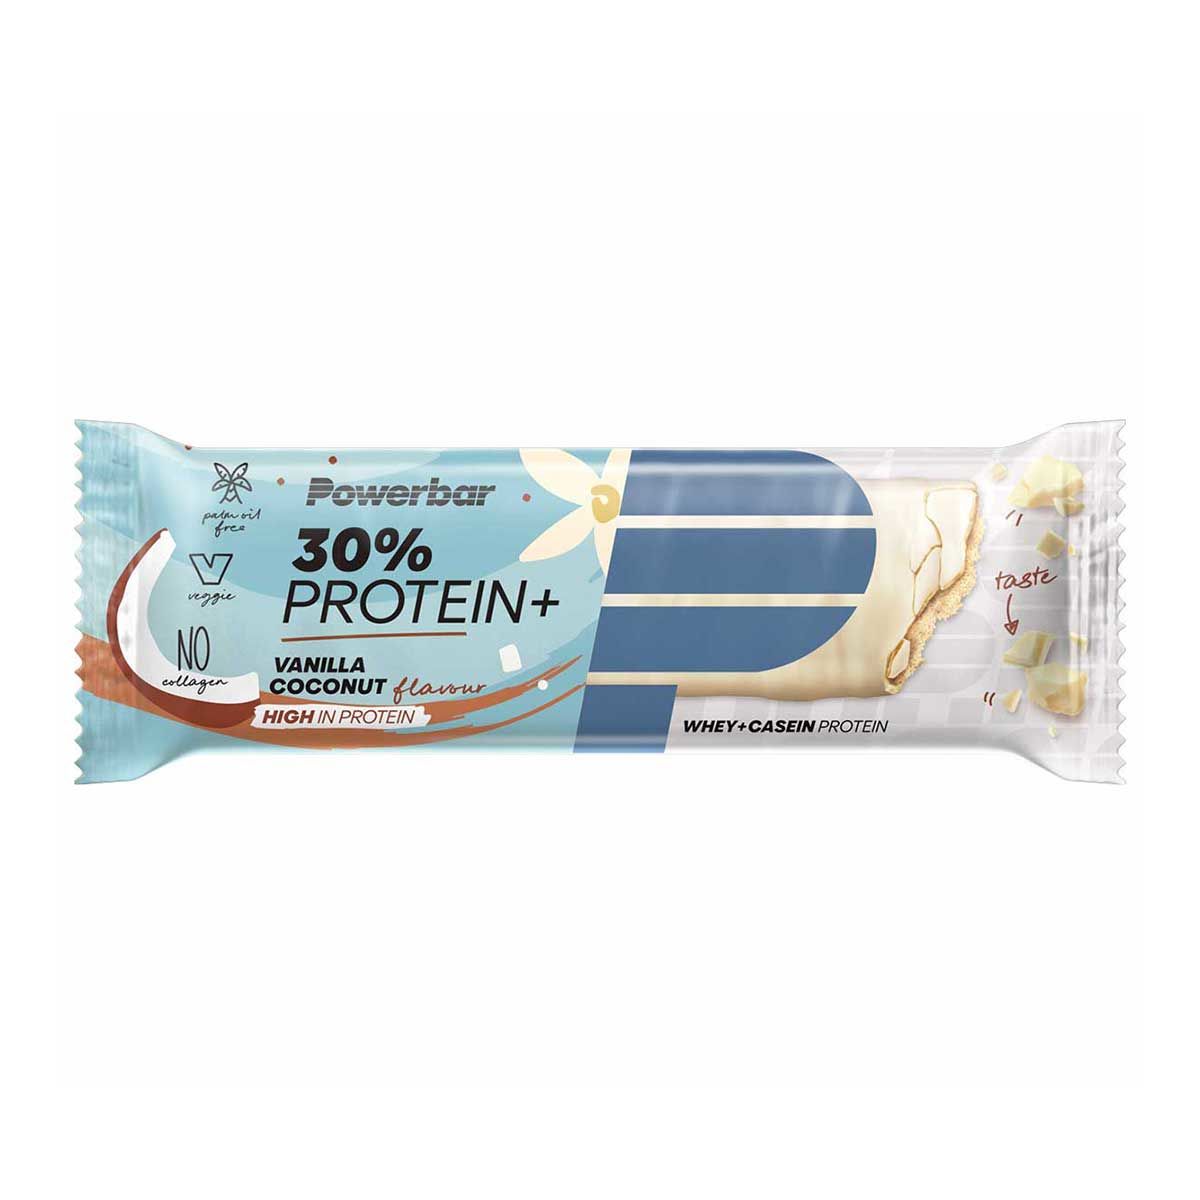 Powerbar 30% Protein Plus bar - Vanilla, coconut